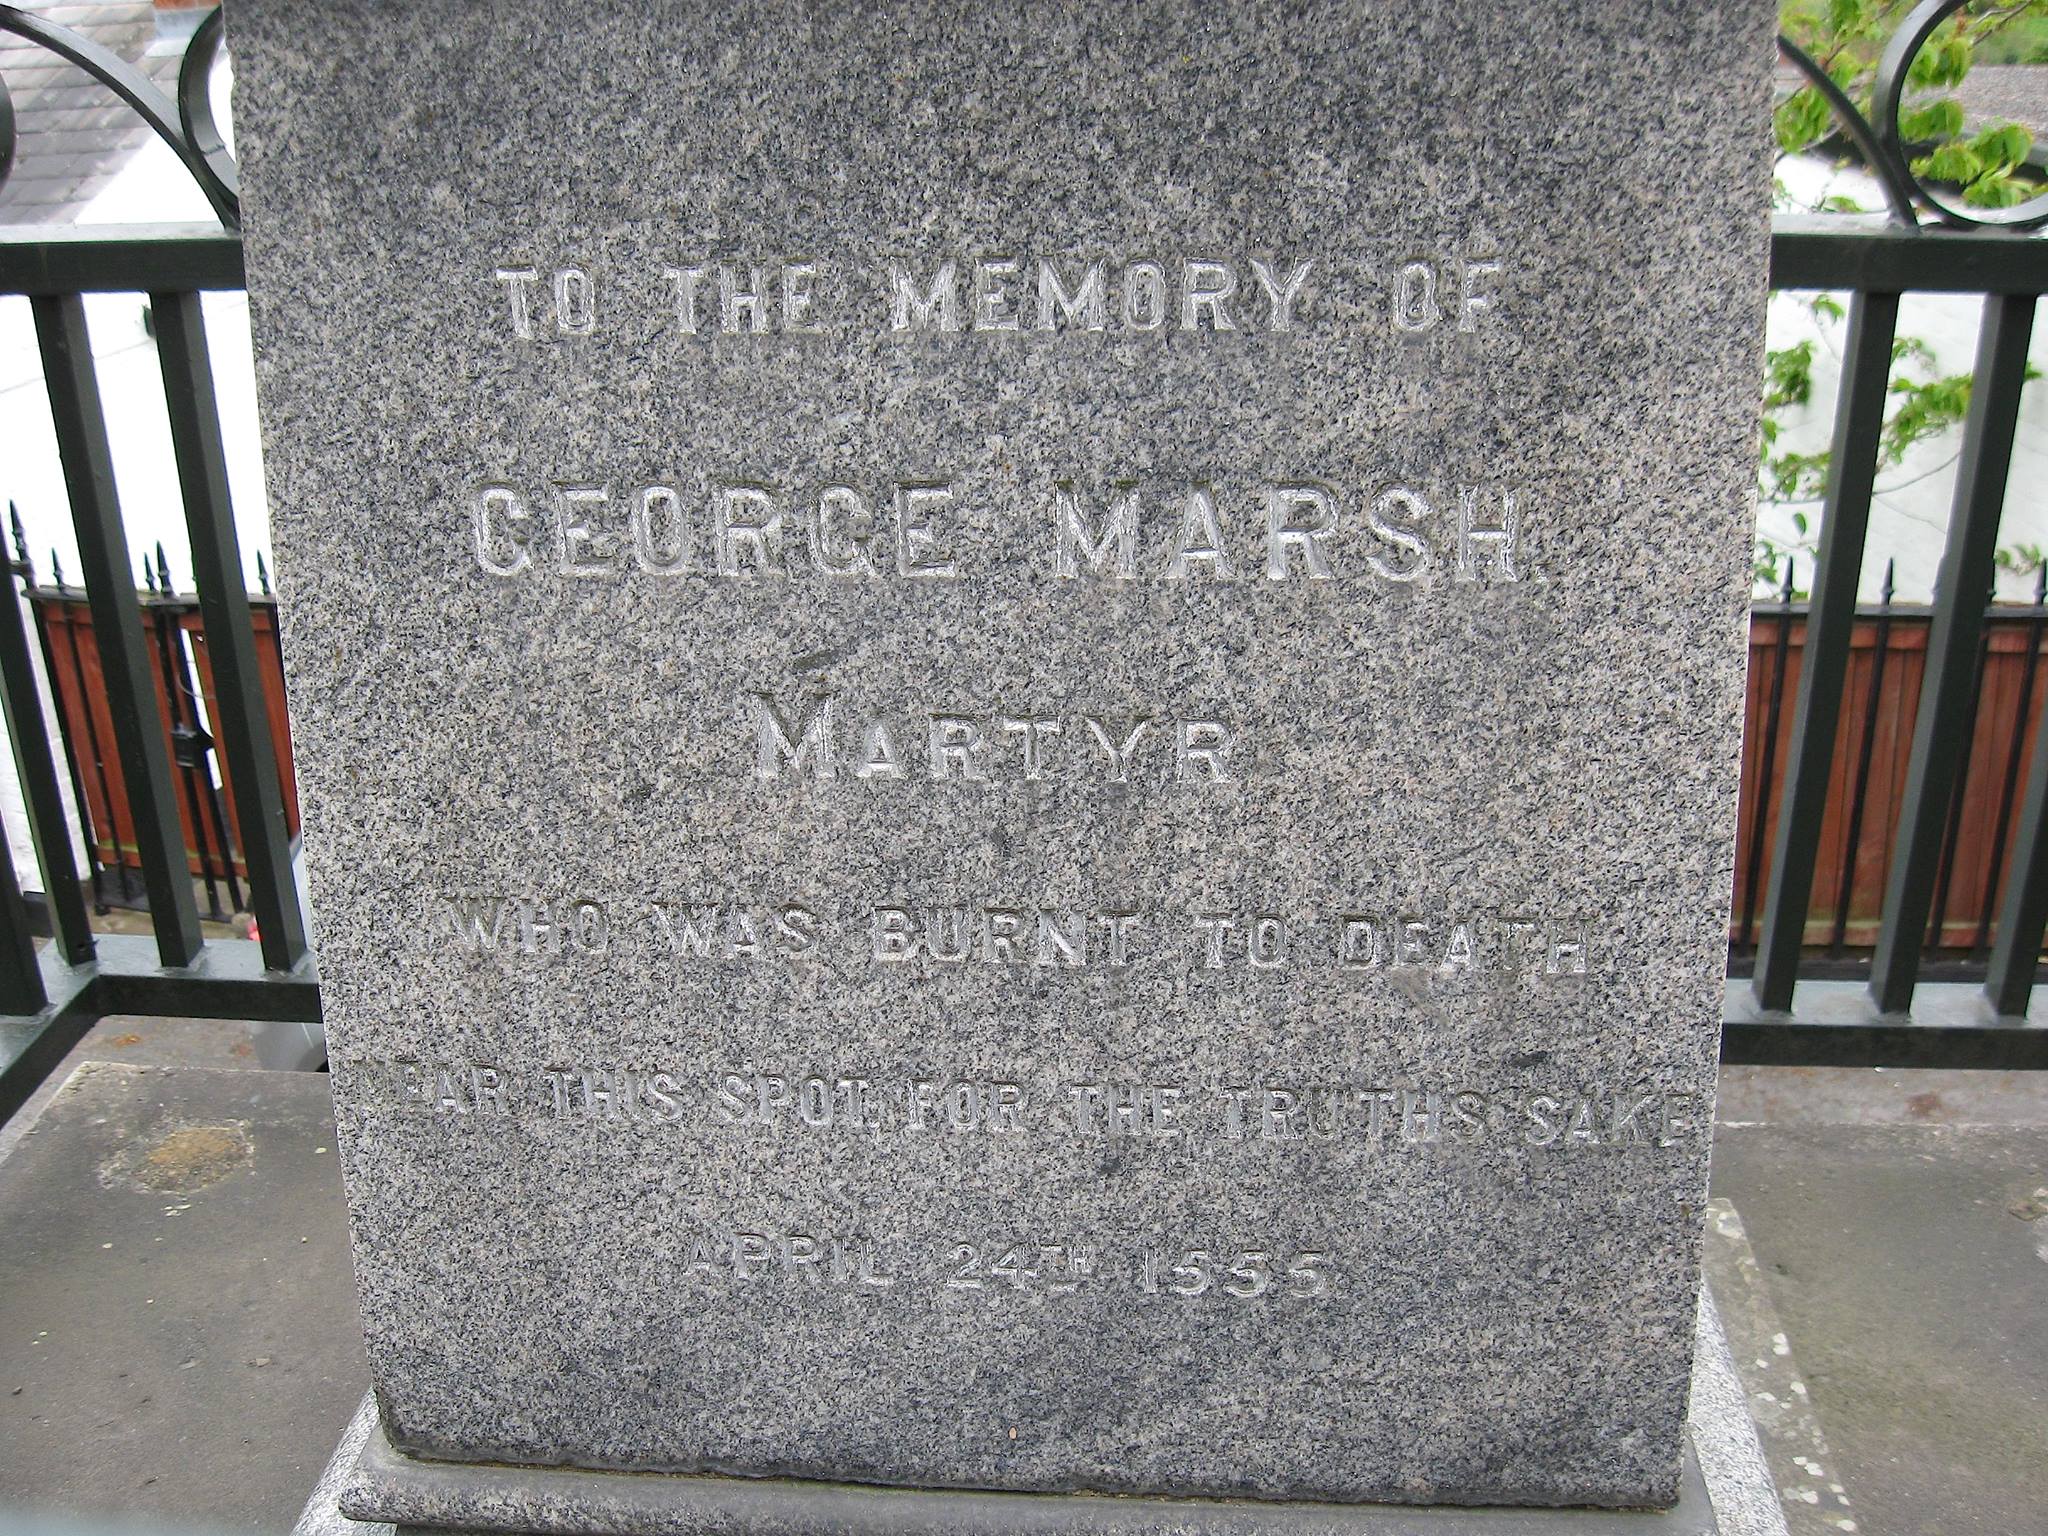 George Marsh Memorial